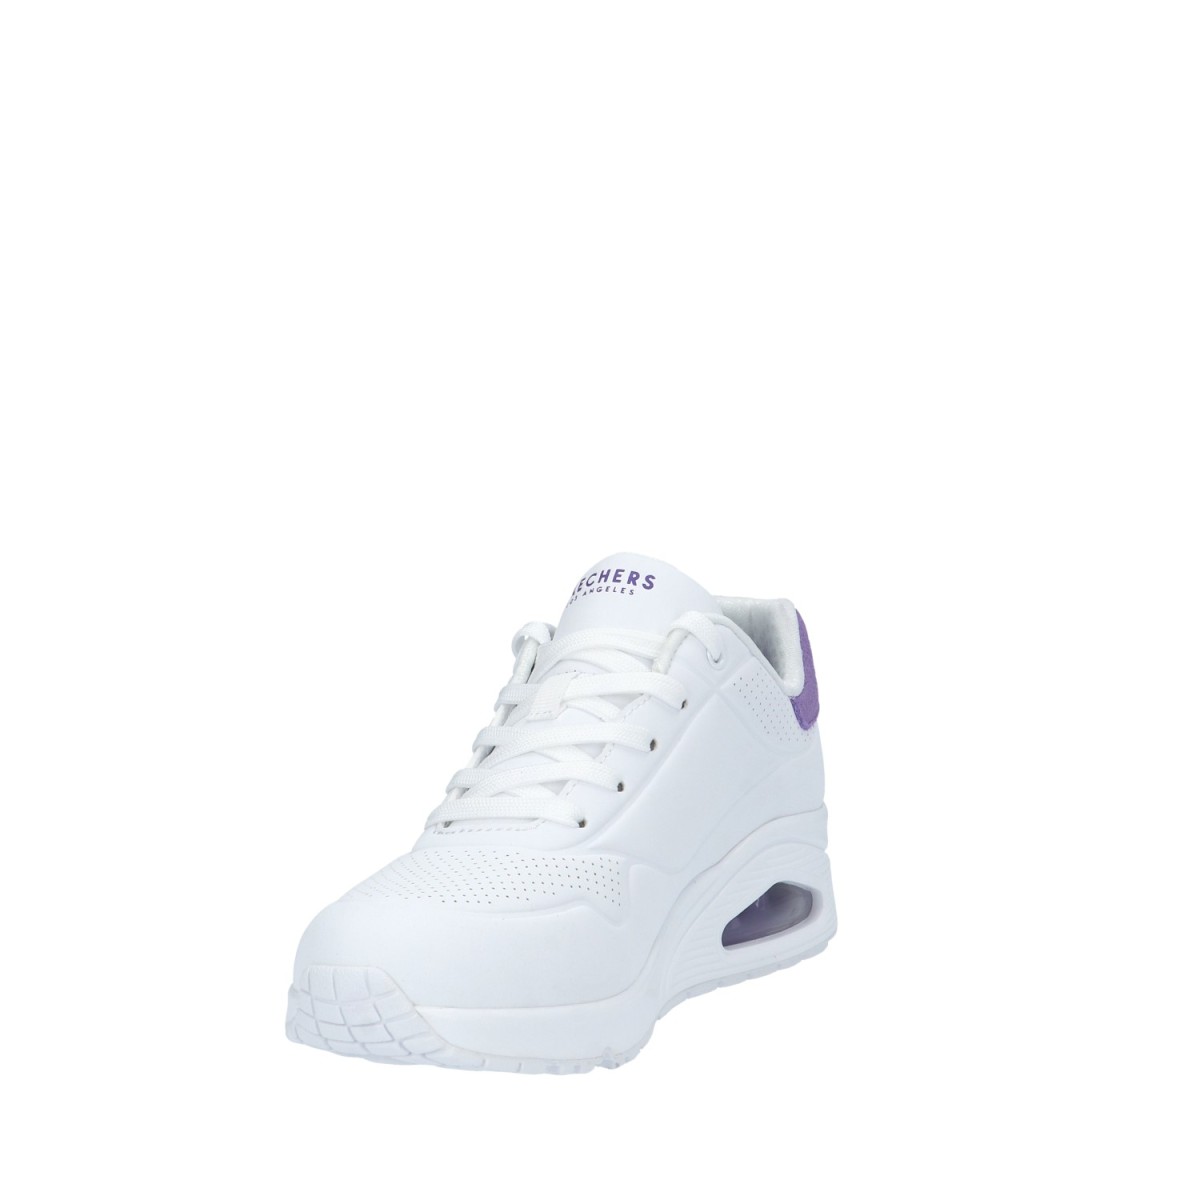 Skechers Sneaker Bianco/viola Gomma 177092